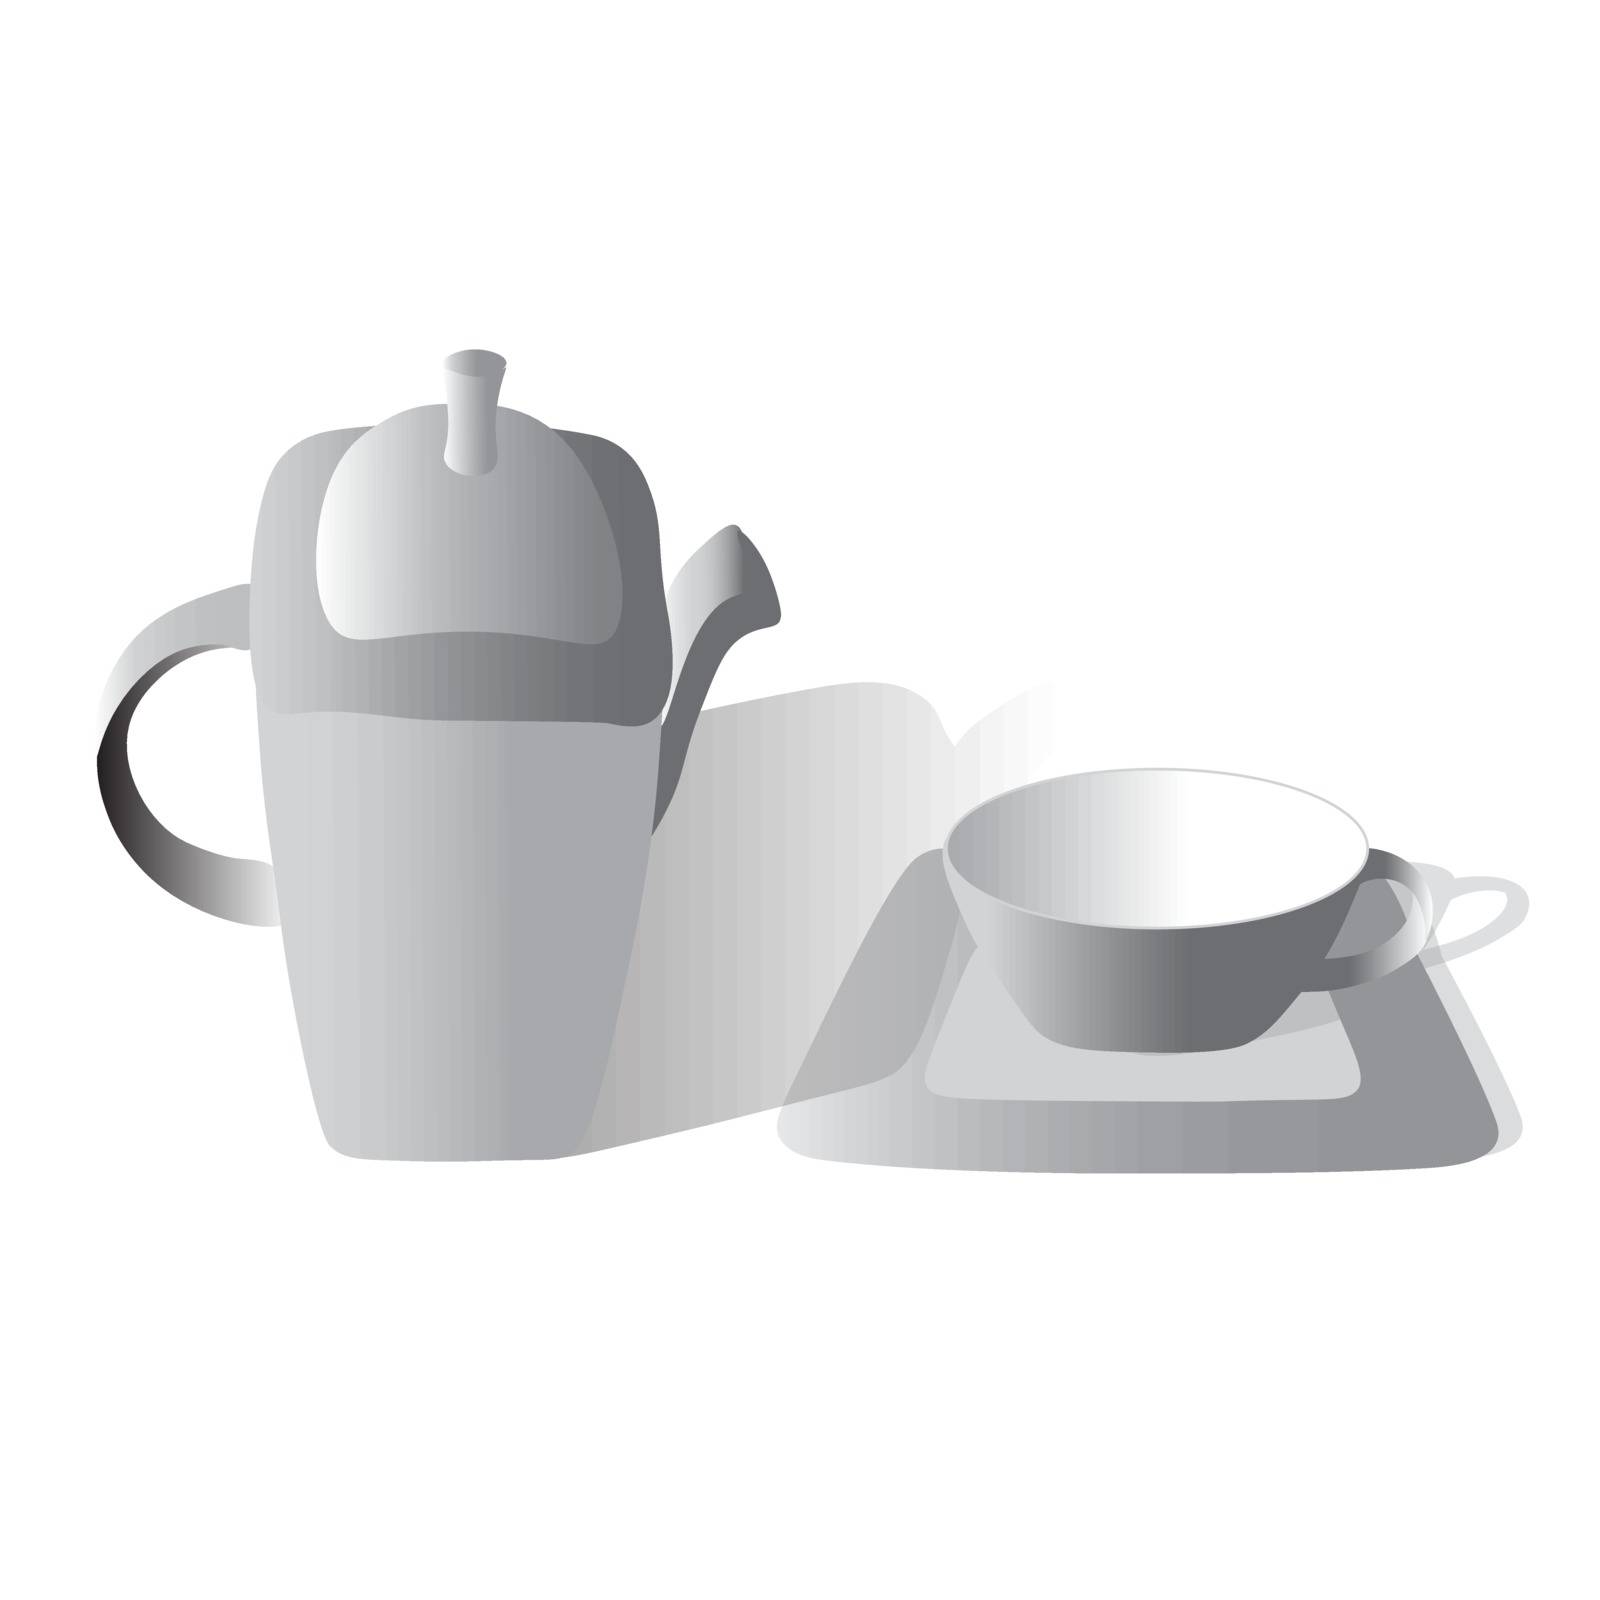  Tea set gray by lilystudio